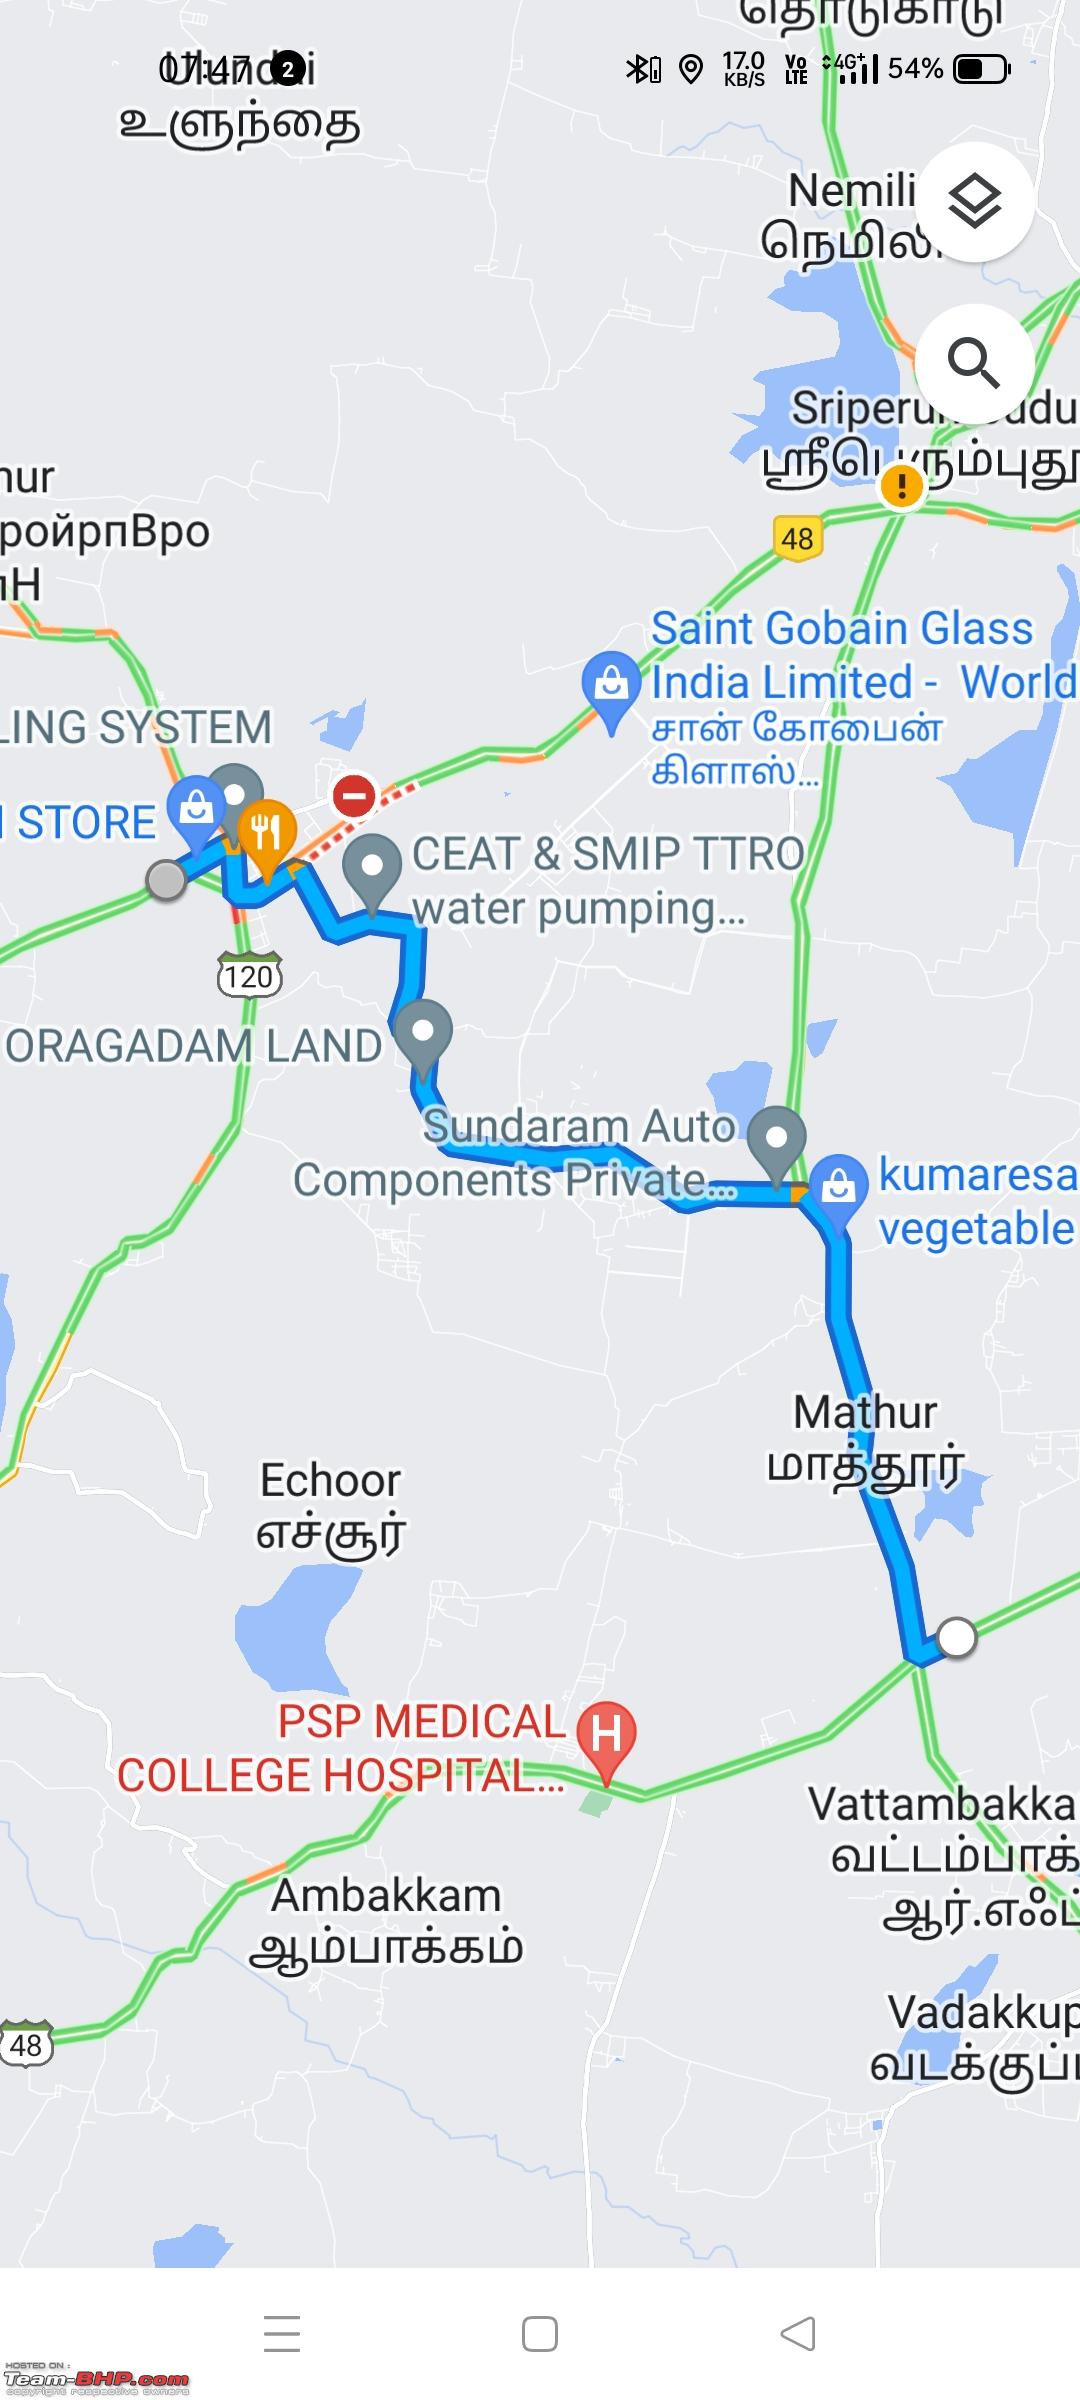 2308784 Bangalore Chennai Bangalore Route Queries Screenshot 2022051707475754 3d9111e2d3171bf4882369f490c087b4 